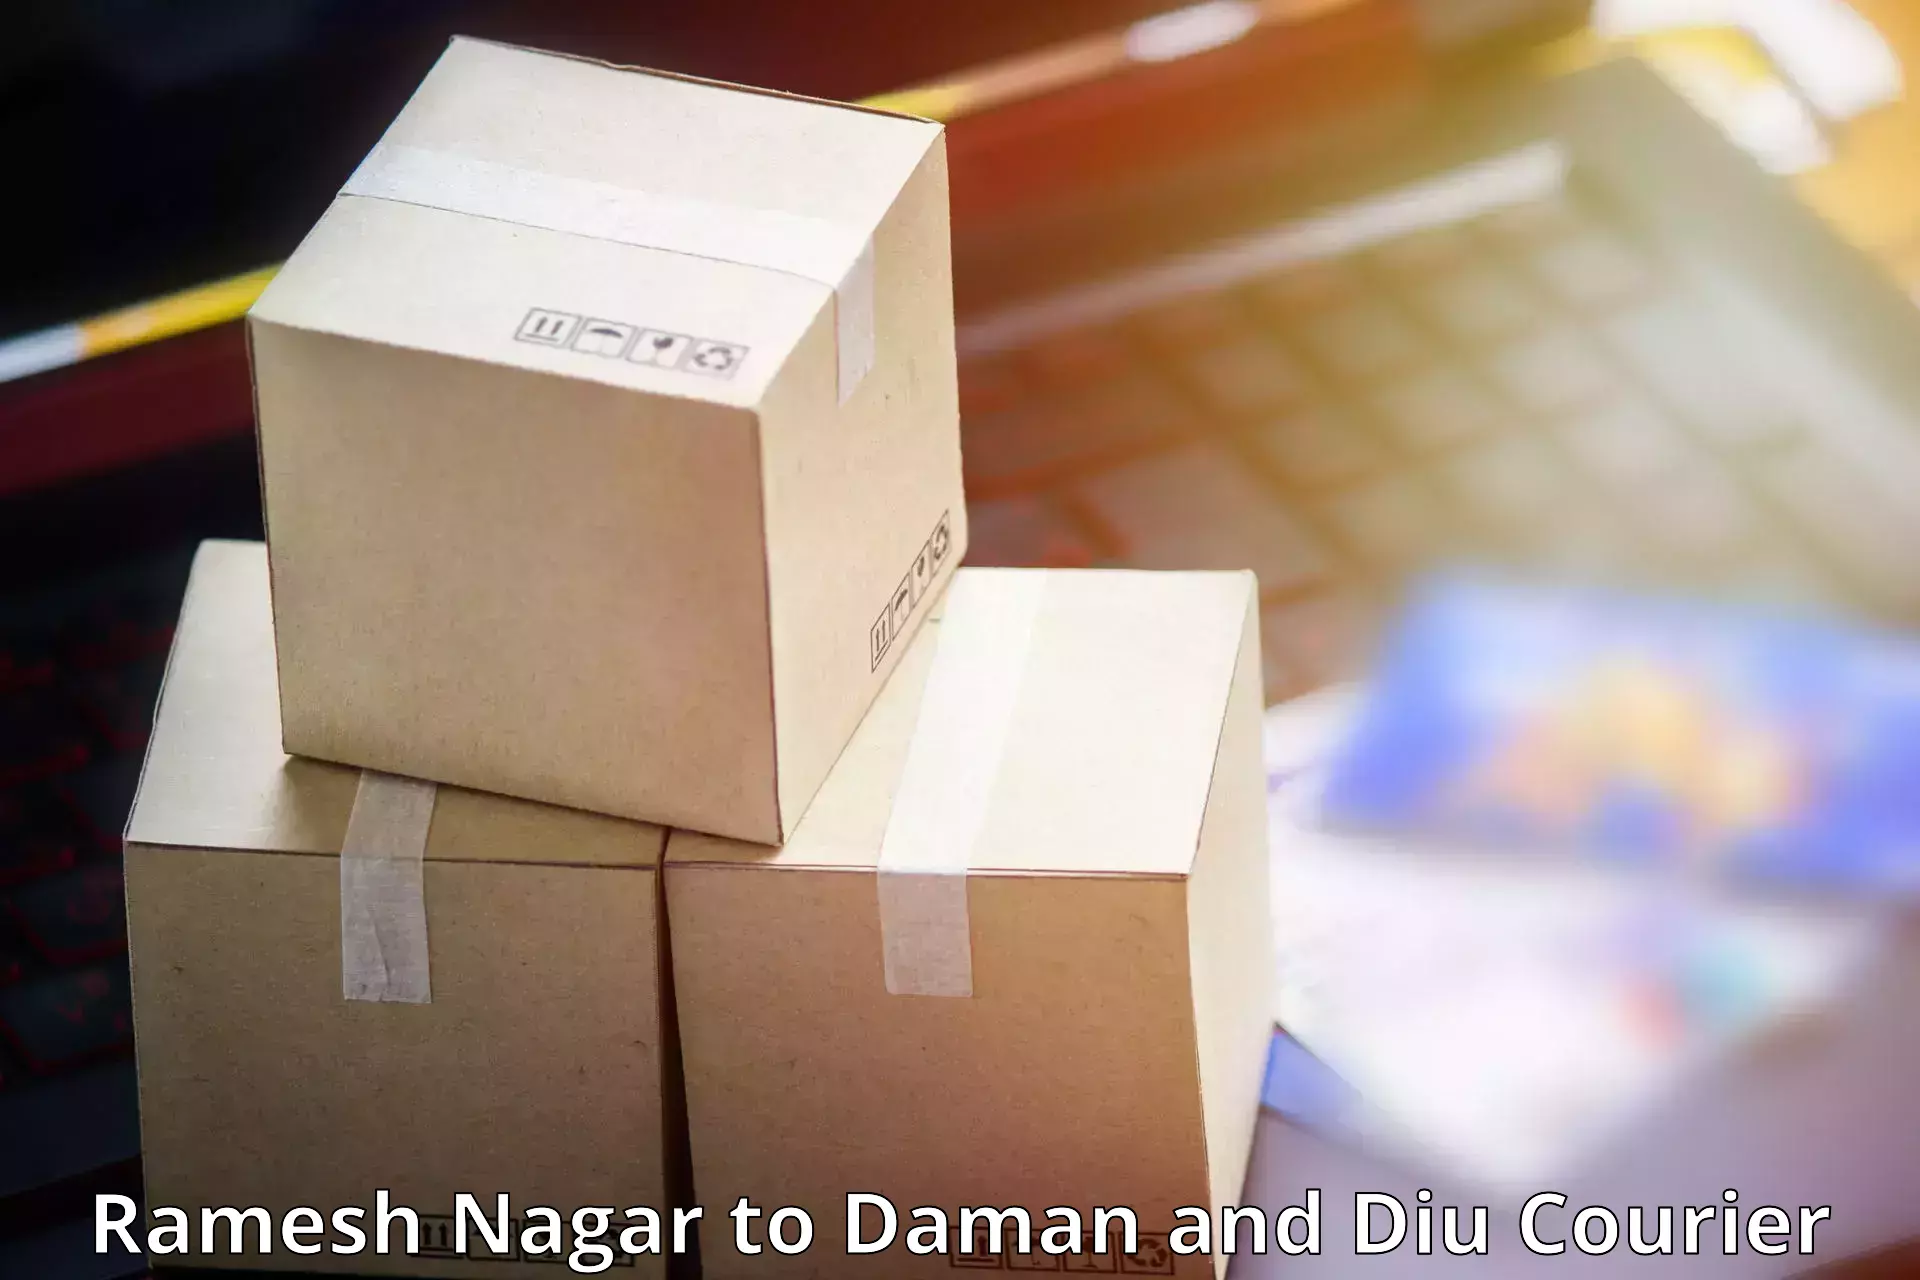 Global shipping networks Ramesh Nagar to Diu